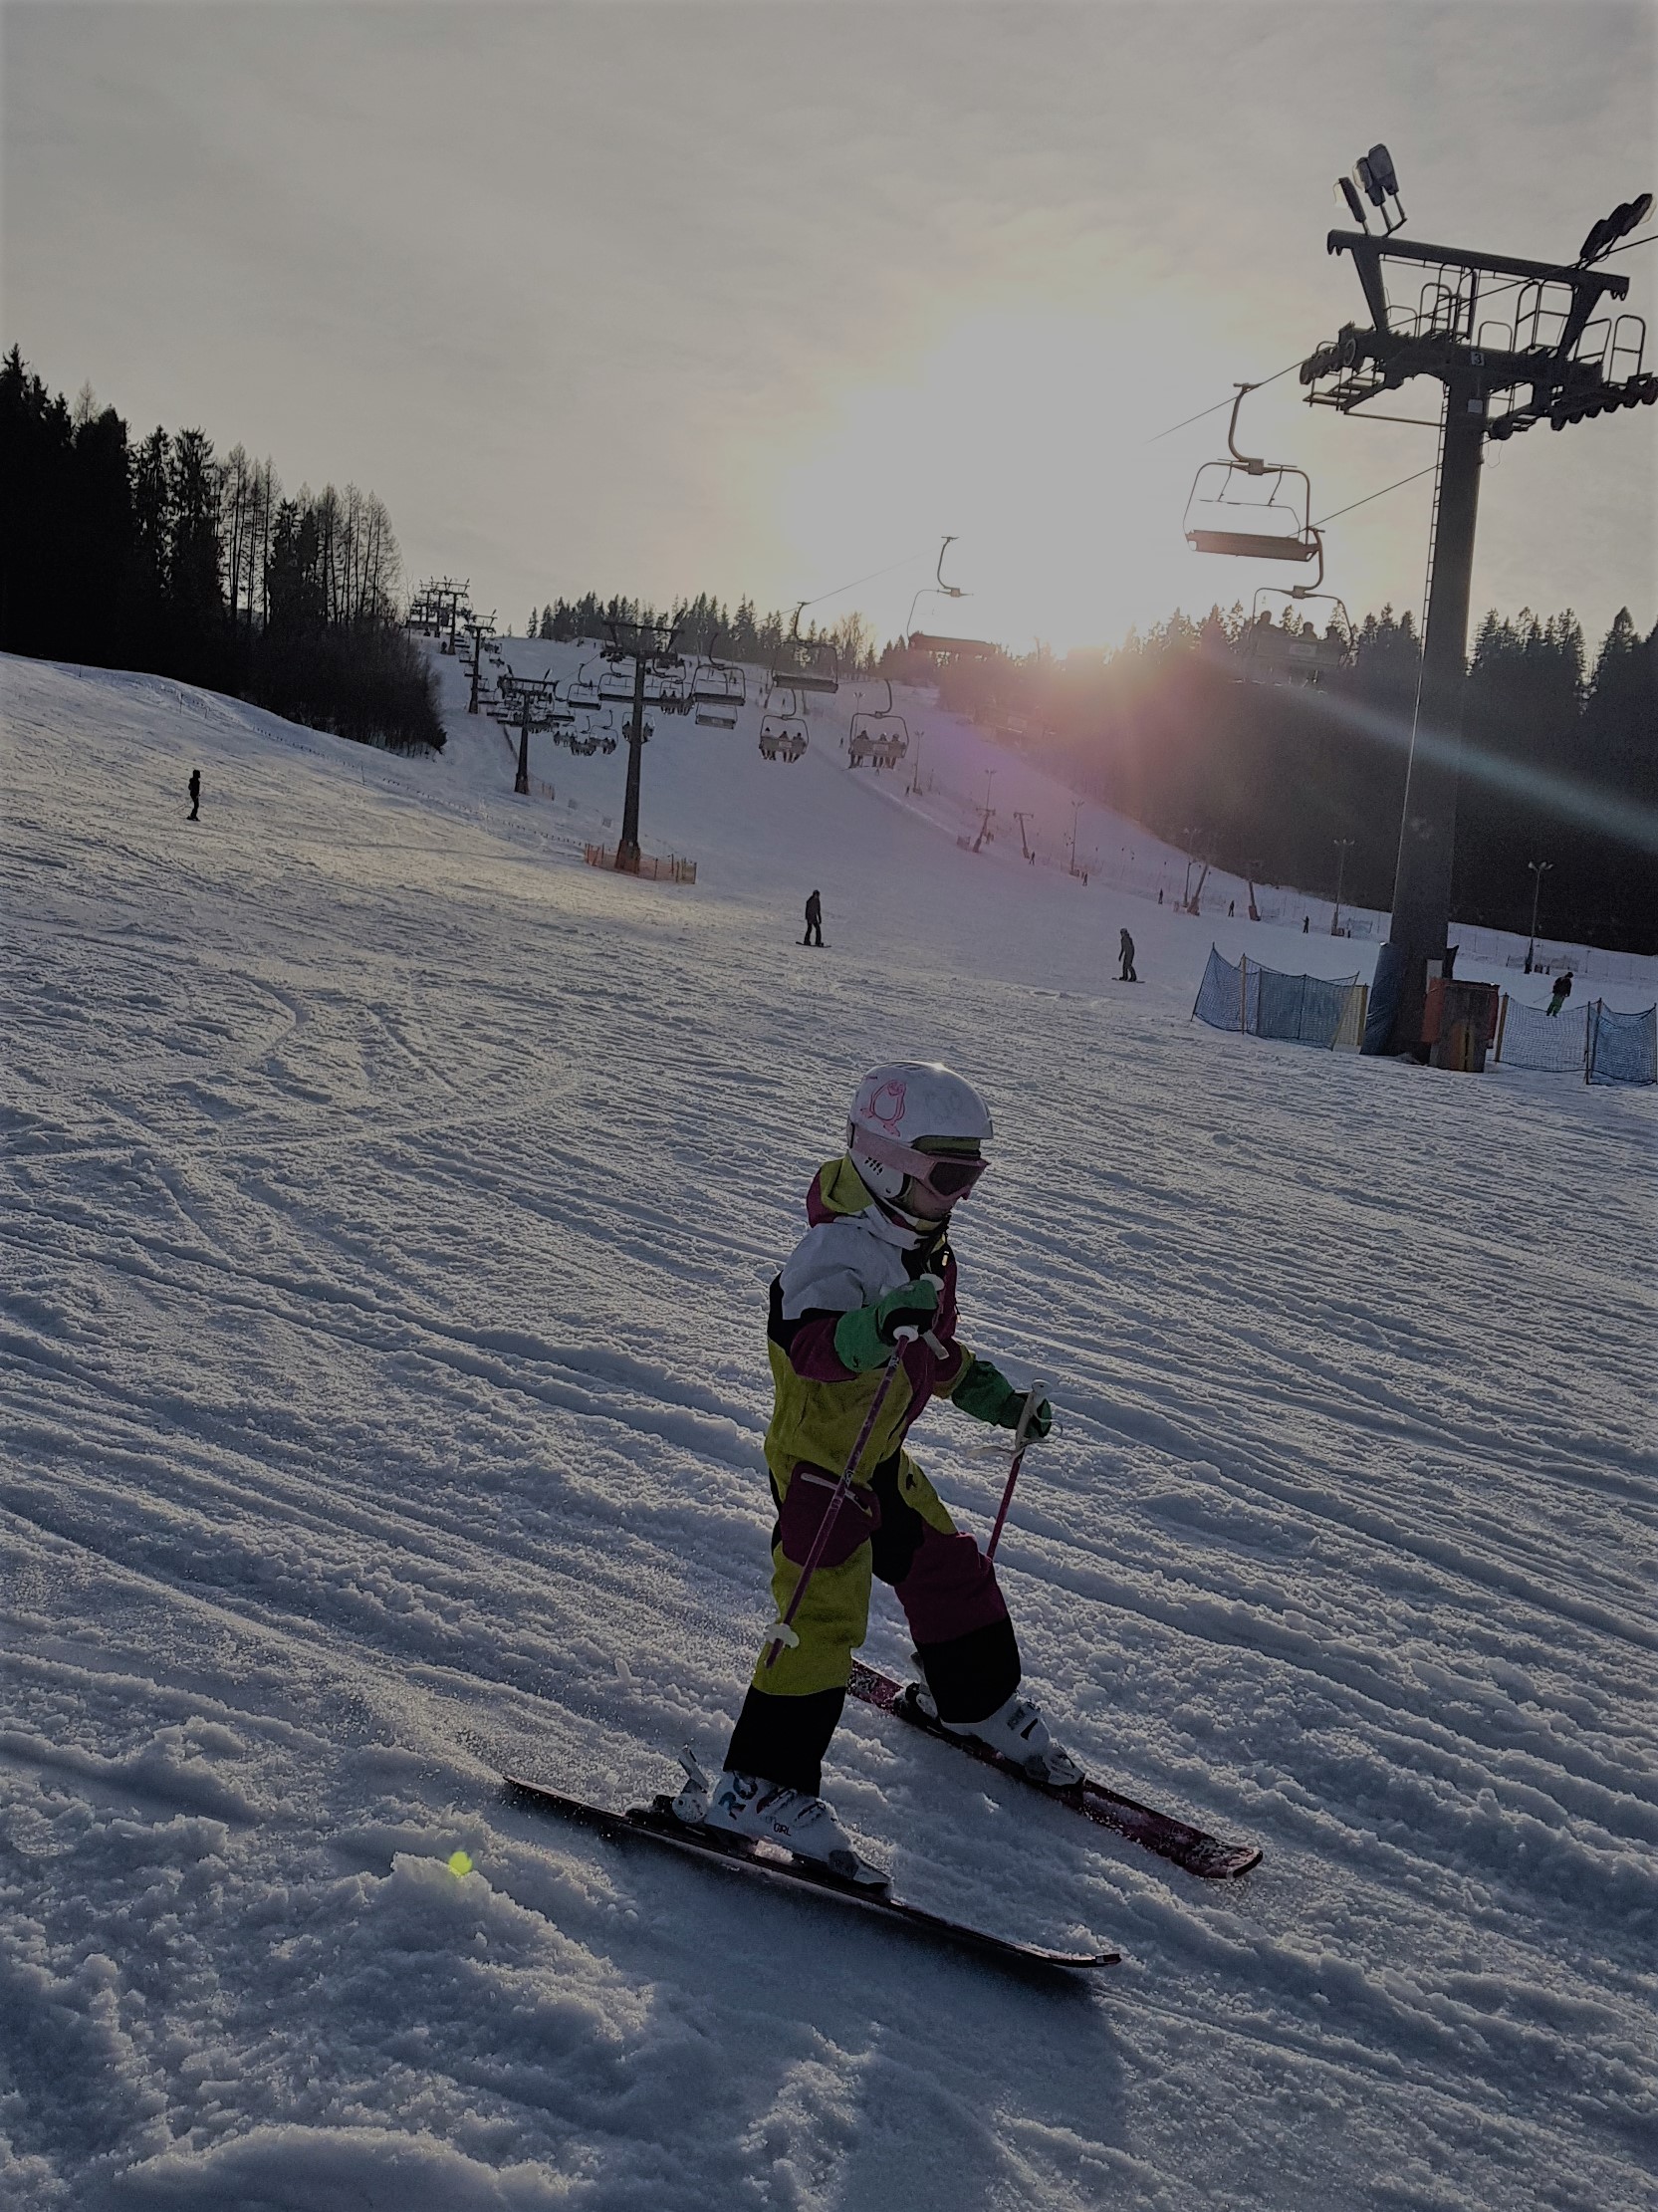 Child skiing on snow